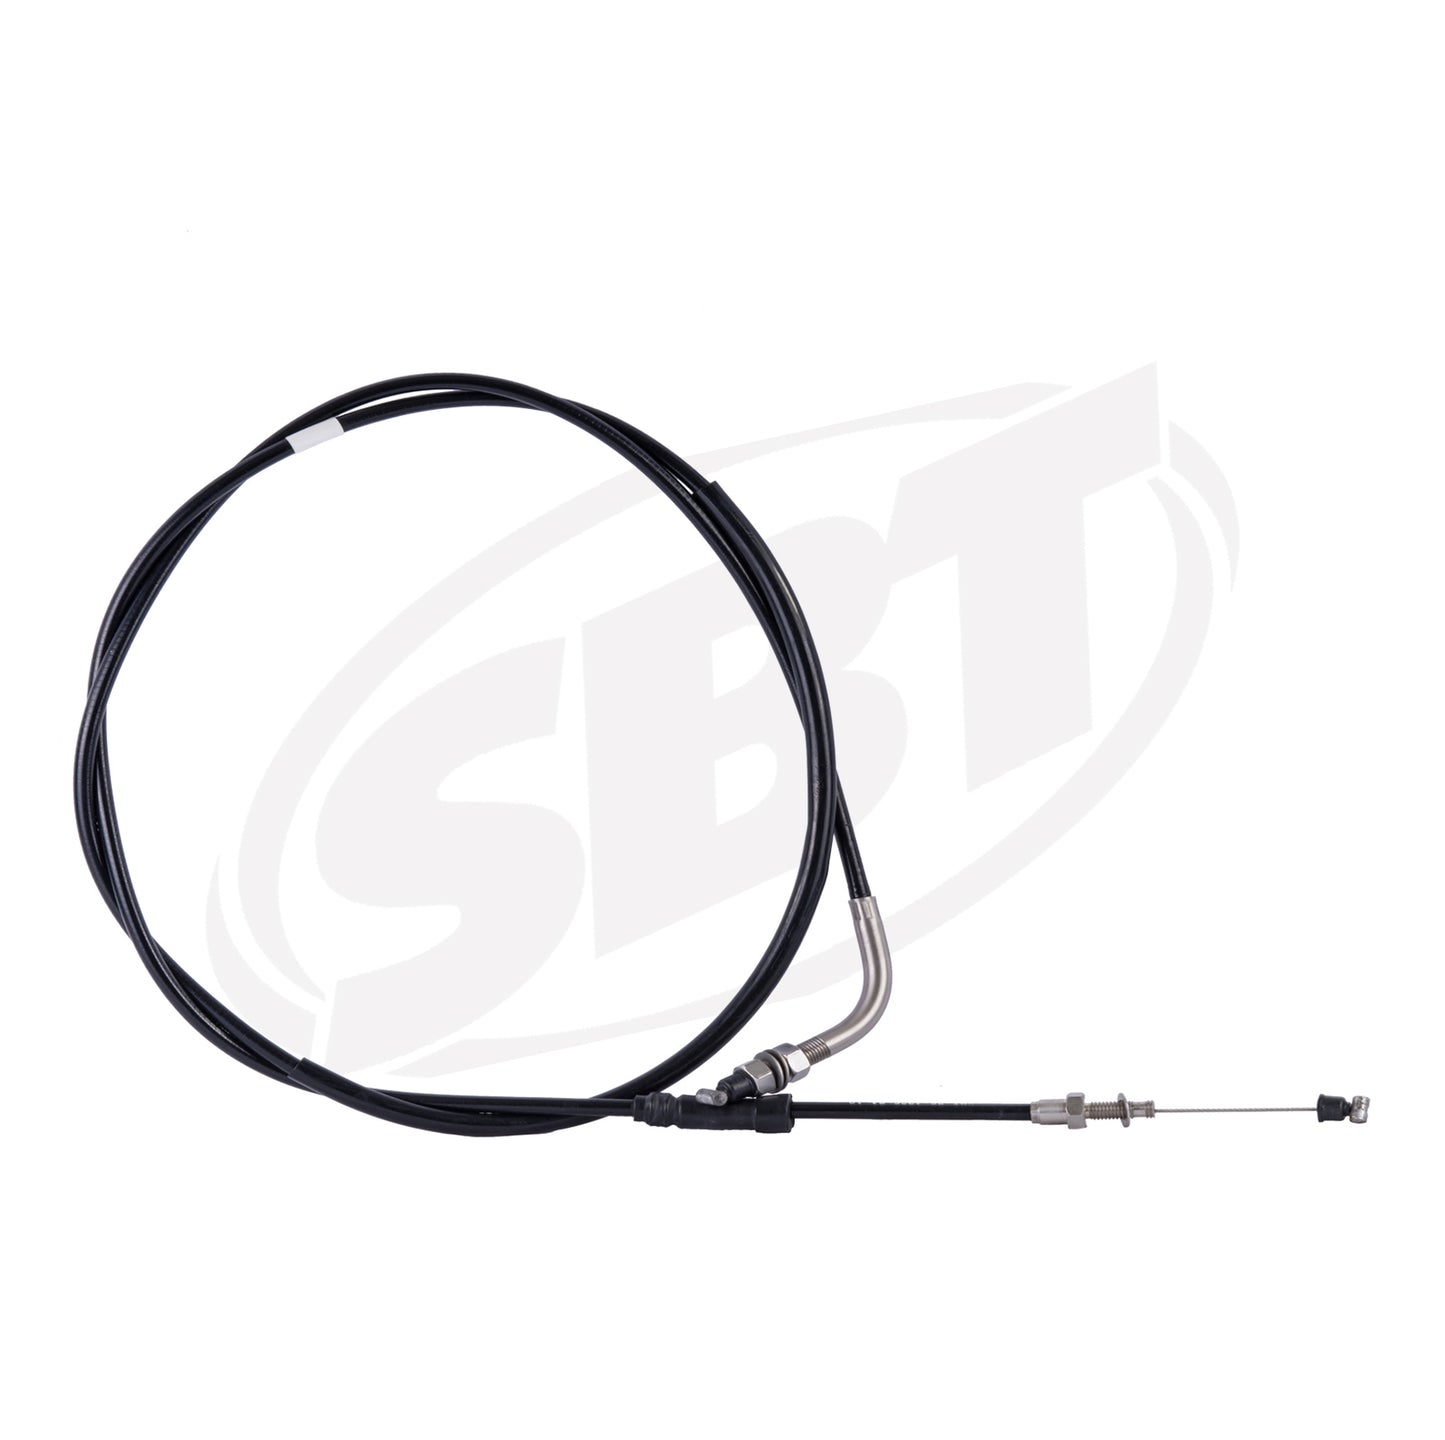 SBT Kawasaki Throttle Cable TS 54012 1996 ( PRE ORDER )